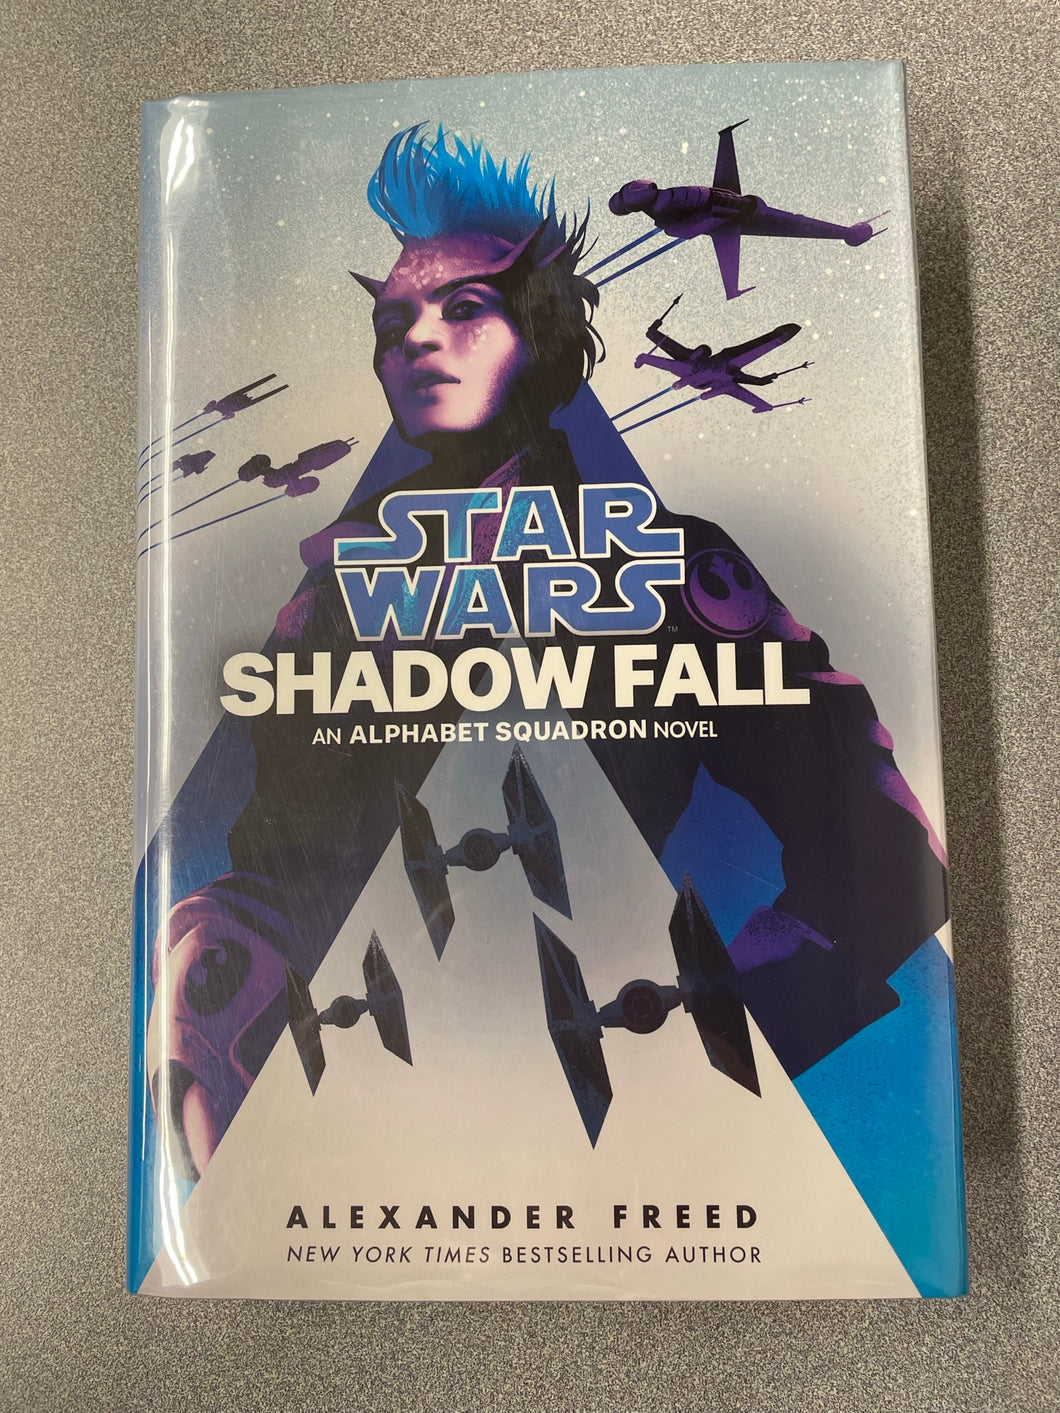 Freed, Alexander, Star Wars Shadowfall: an Alphabet Squadron Novel [2020] SF 9/23